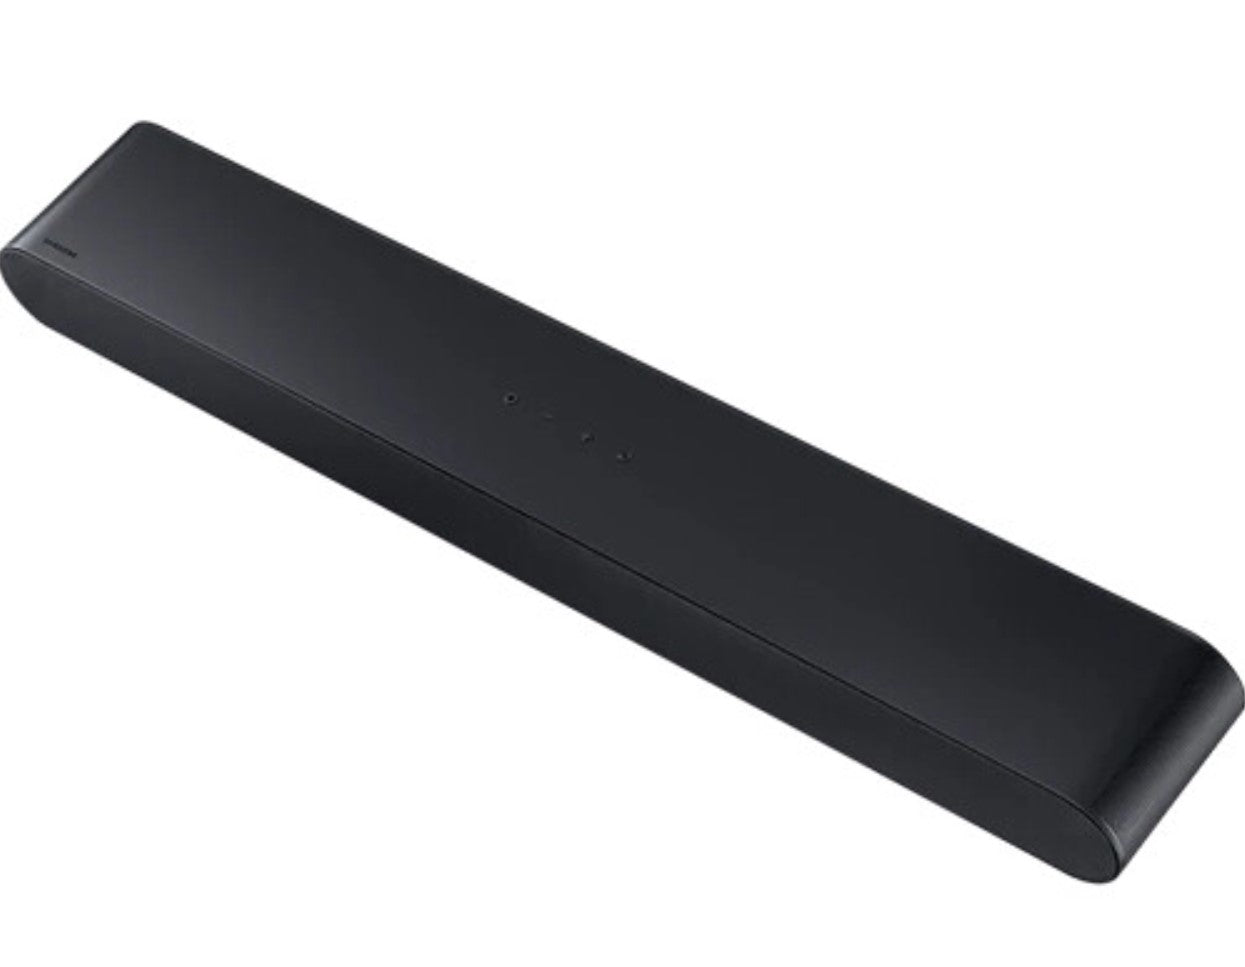 Samsung HW-S60B/ZA-RB 5.0 All-in-One Soundbar - Certified Refurbished